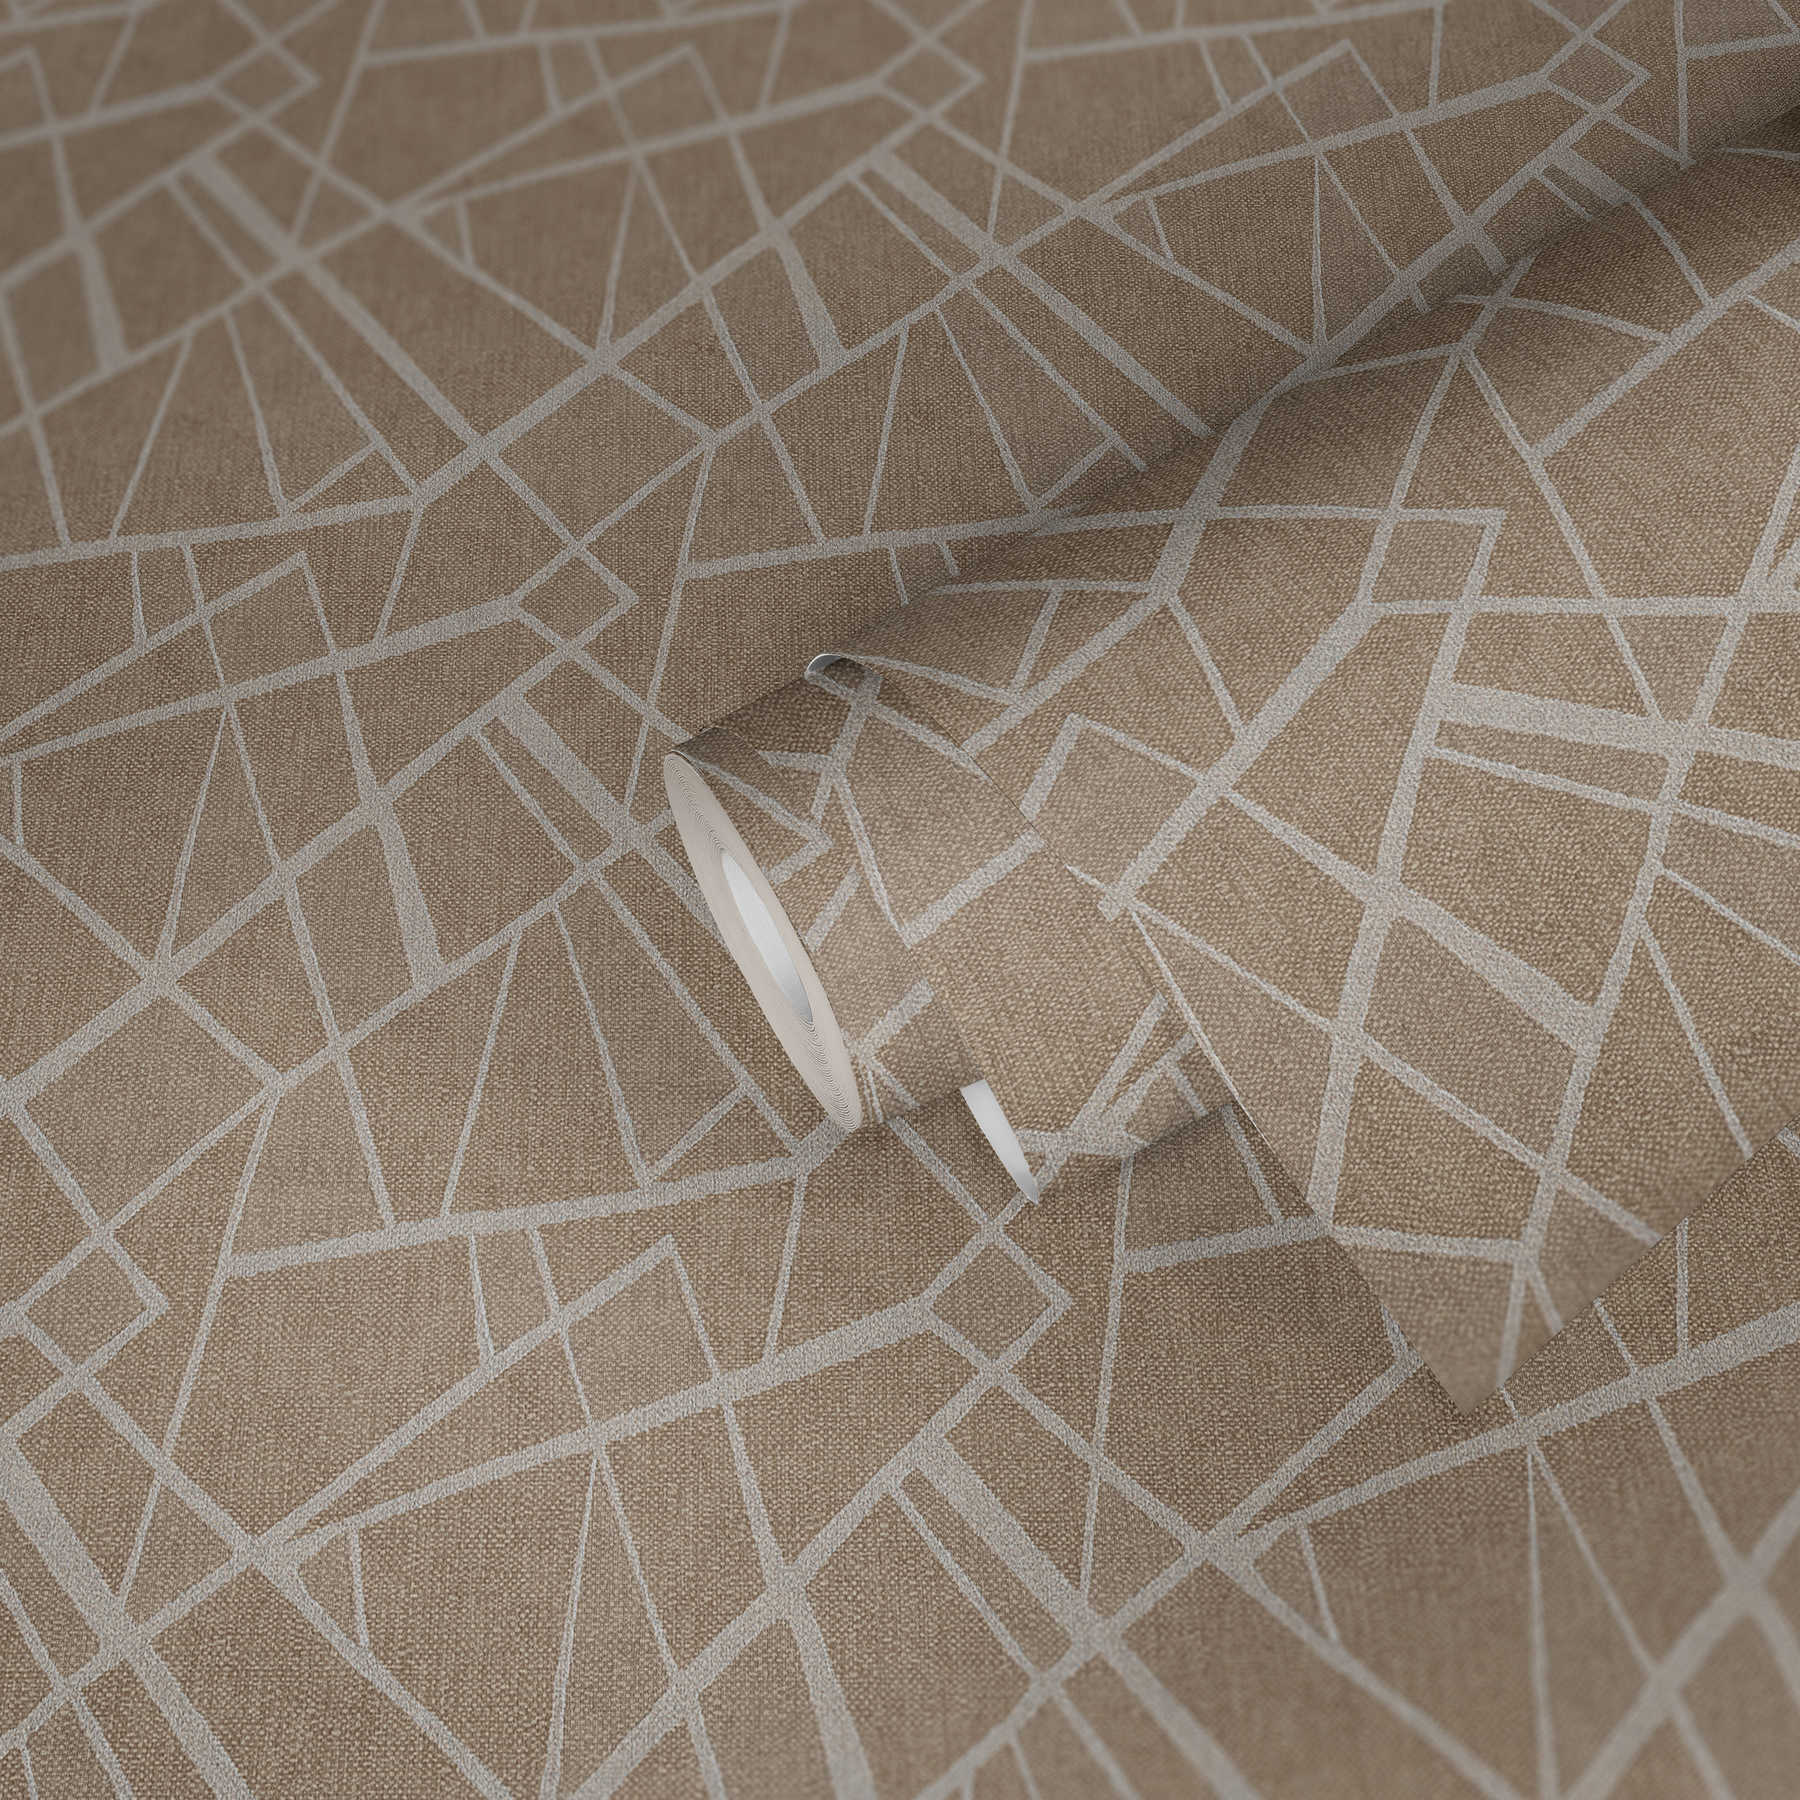             Wallpaper retro 50s line pattern with metallic effect - brown, metallic
        